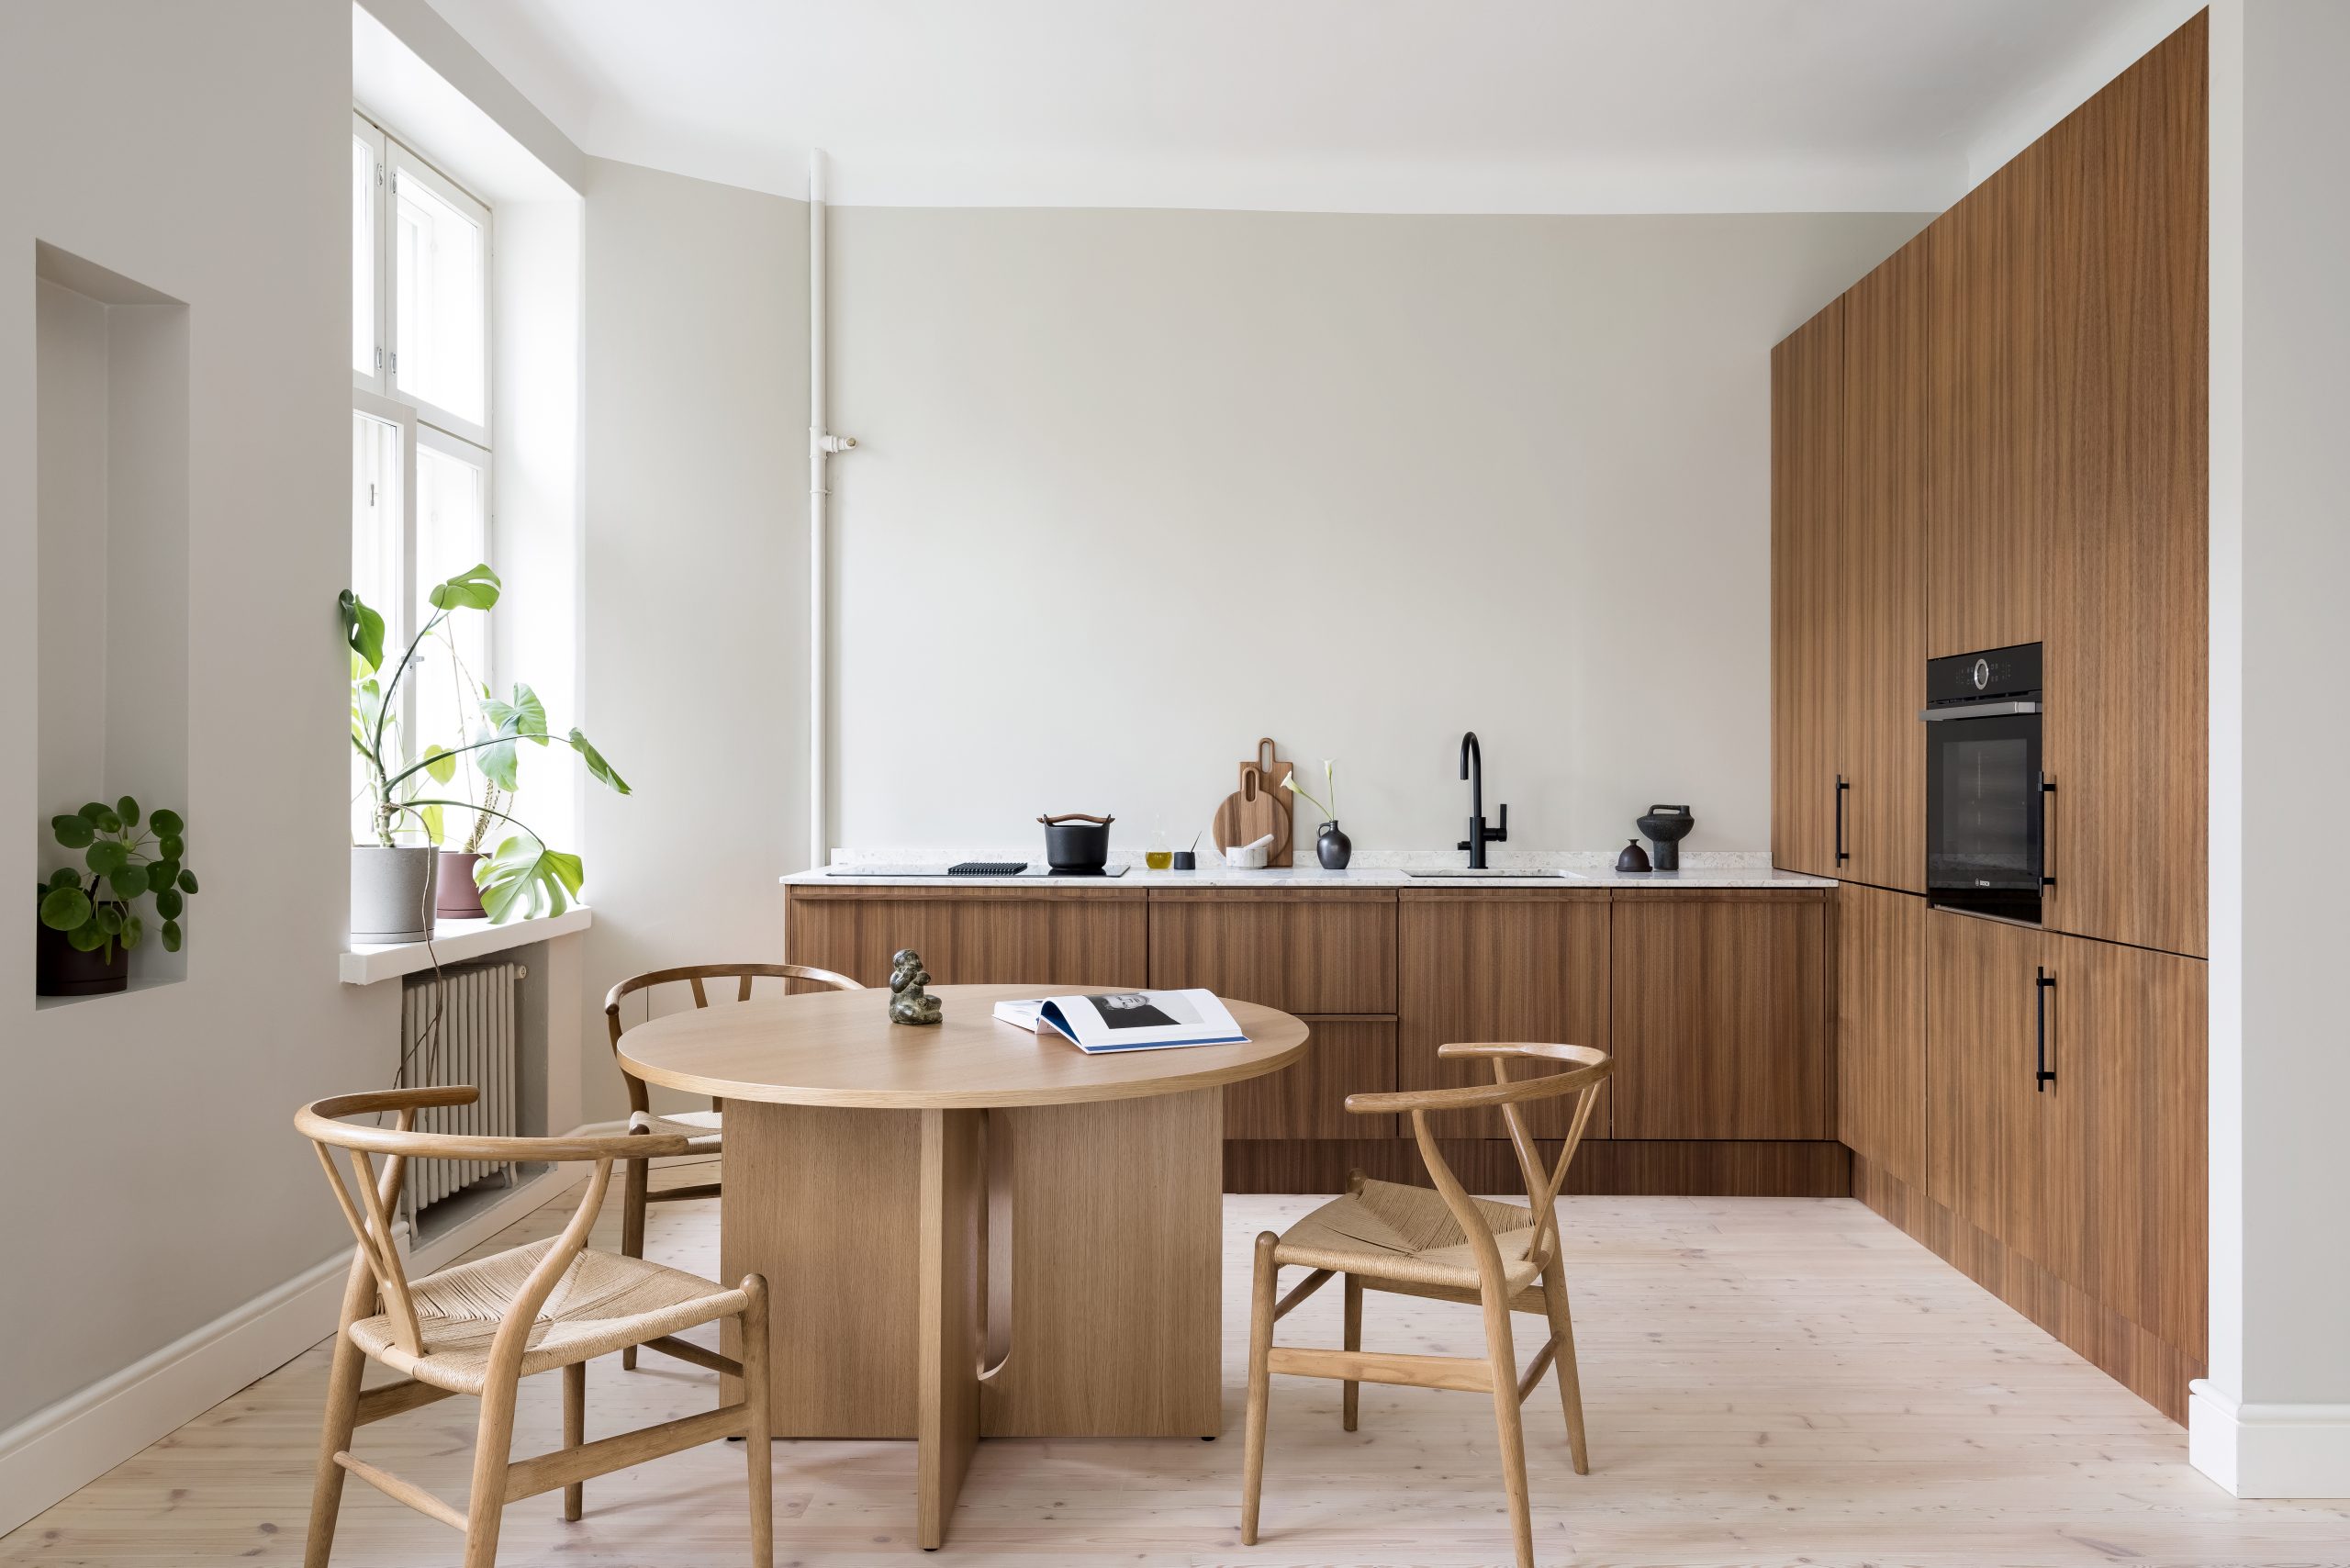 Blau keittiö Helsingissä, jossa pöhkinäpuu ovet ja marmoriterrazzo taso.